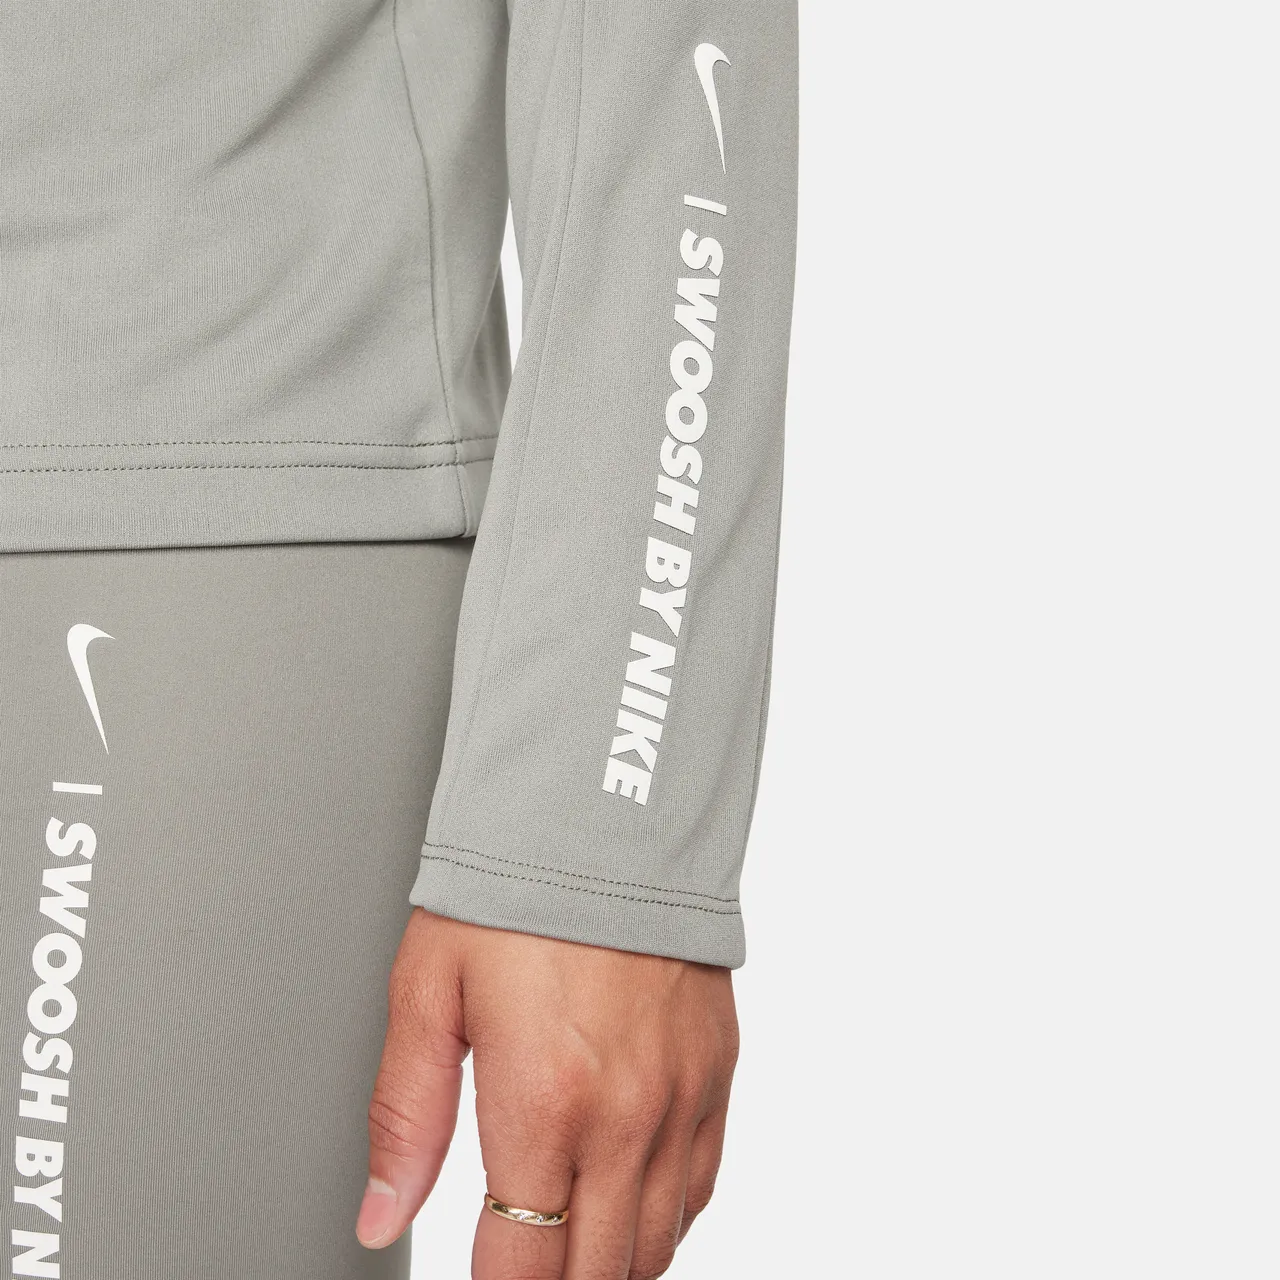 Nike Pacer Women's Dri-FIT 1/4-Zip Sweatshirt - Grey - Polyester